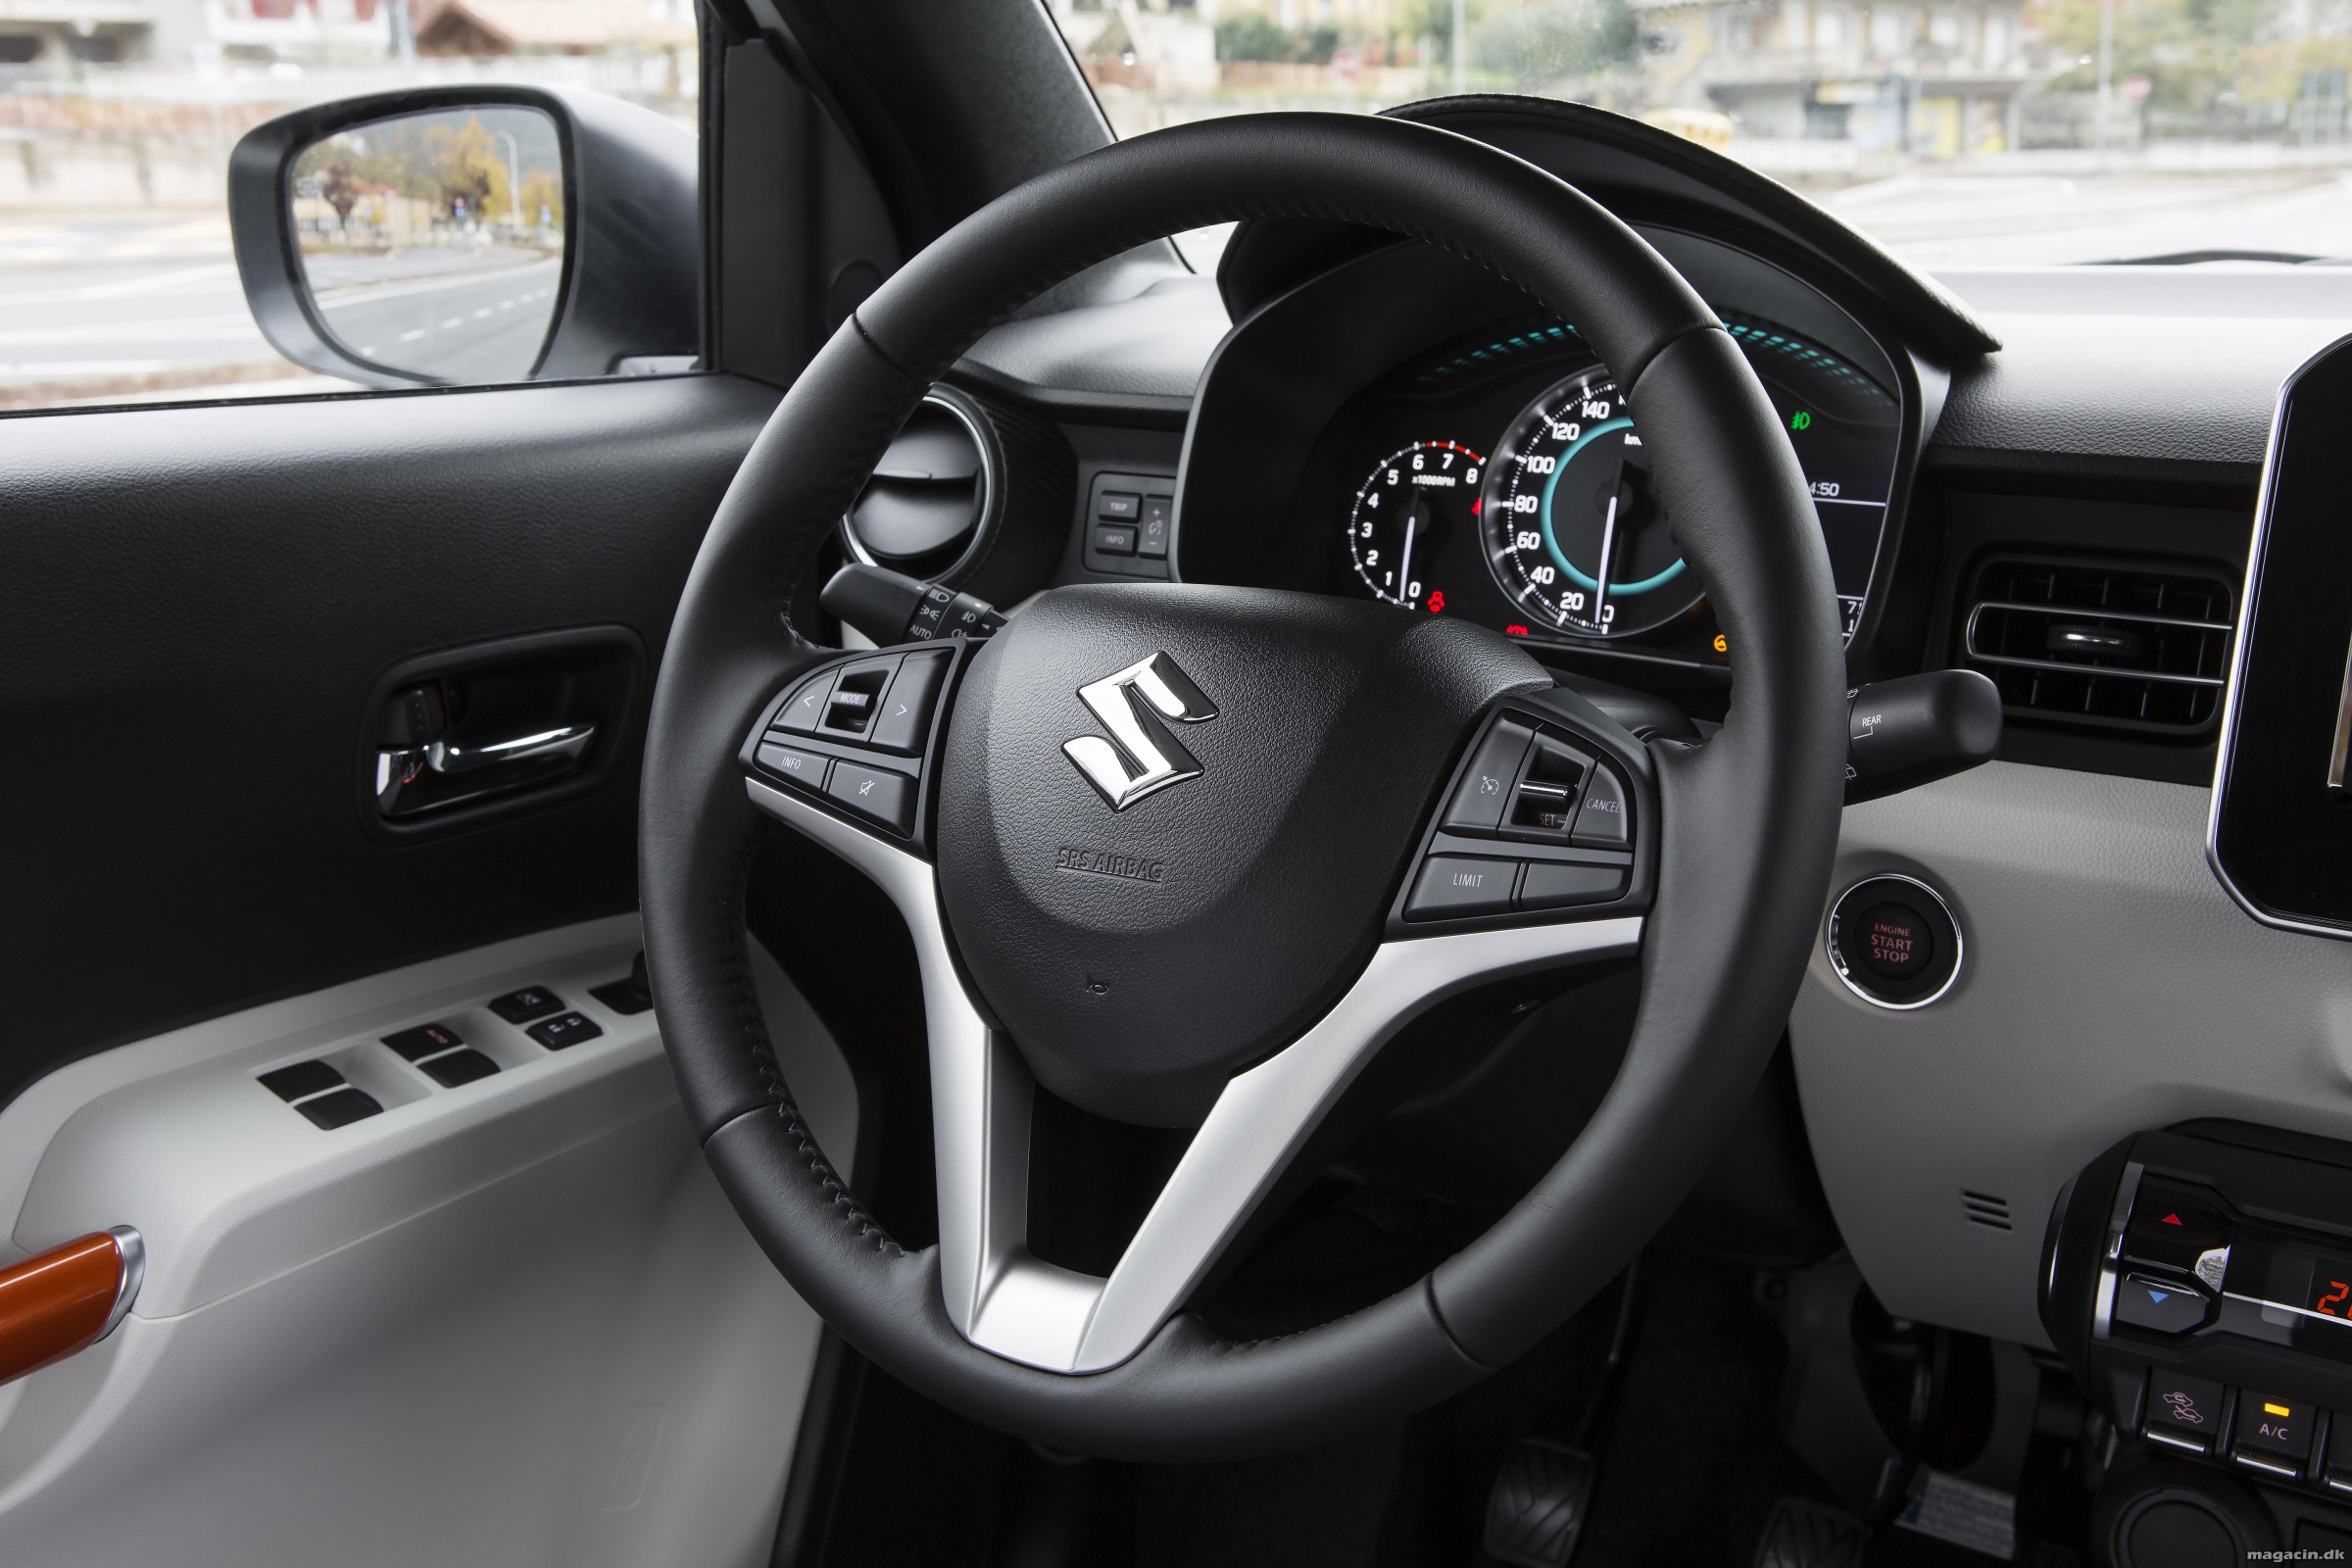 Minitest: Suzuki Ignis crossover 2017